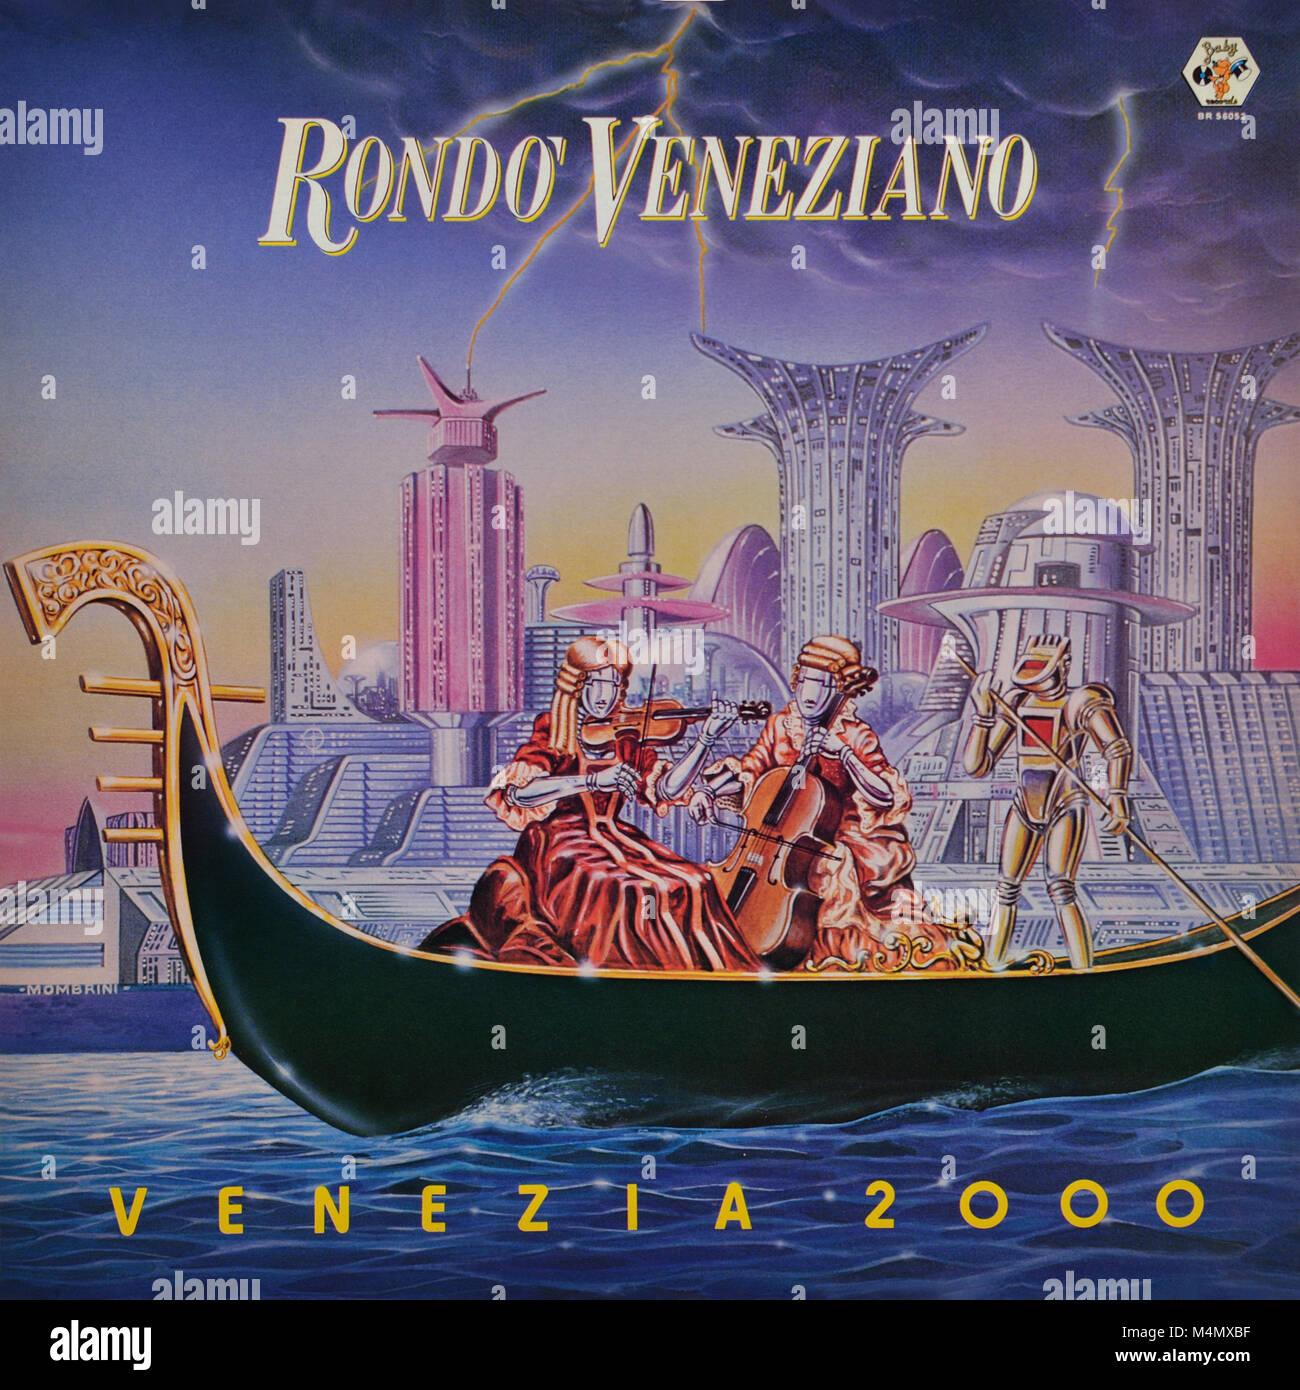 Rondò Veneziano - original vinyl album cover - Venezia 2000 - 1983 Stock Photo